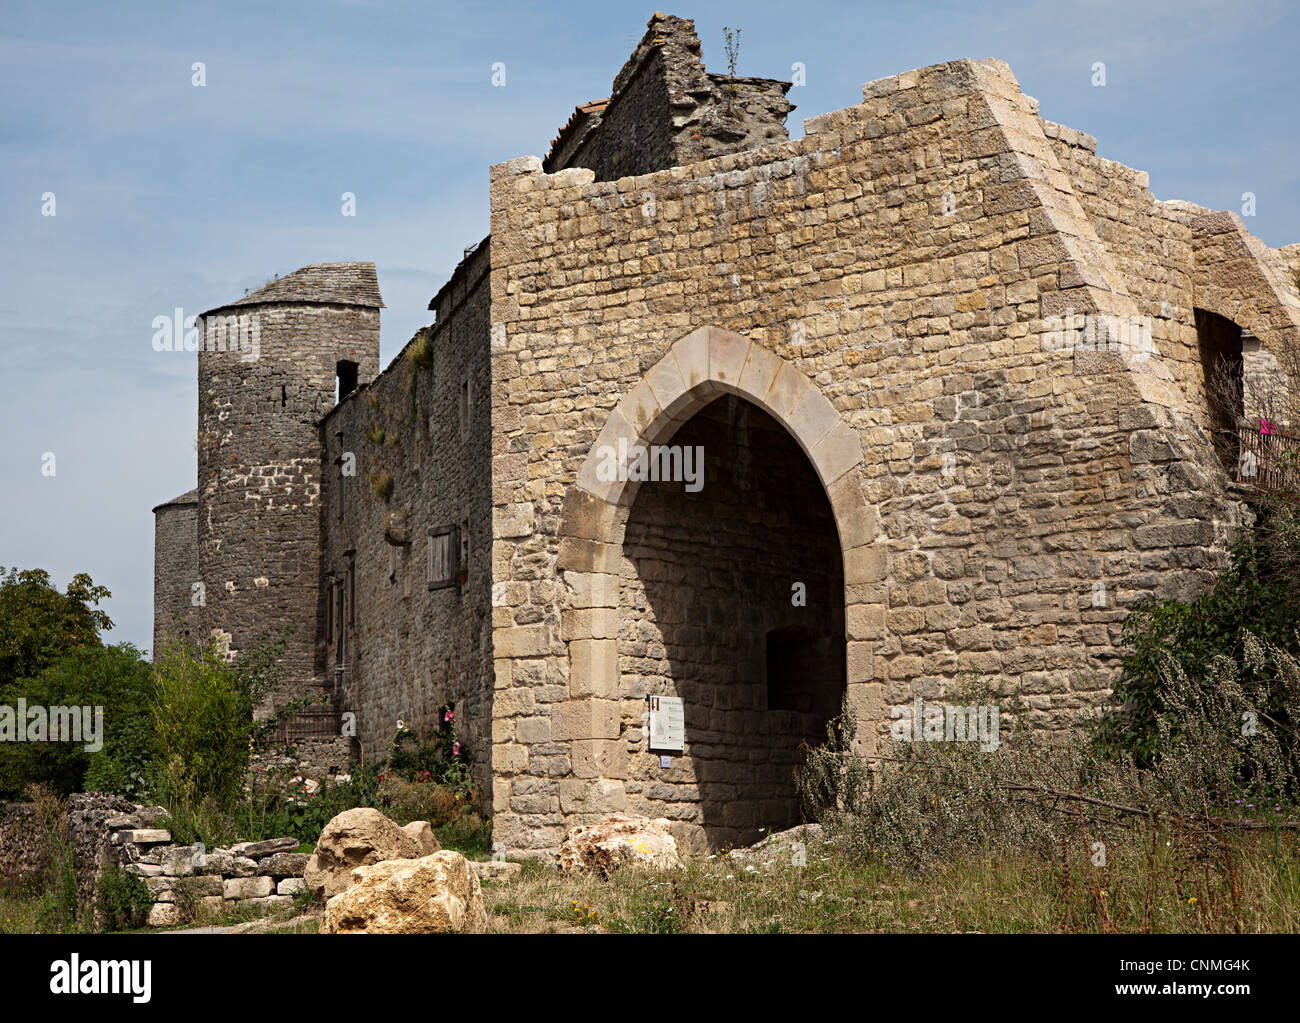 El renovado portal d'Aval, Cite de la Couvertoirade, Aveyron, Francia Foto de stock